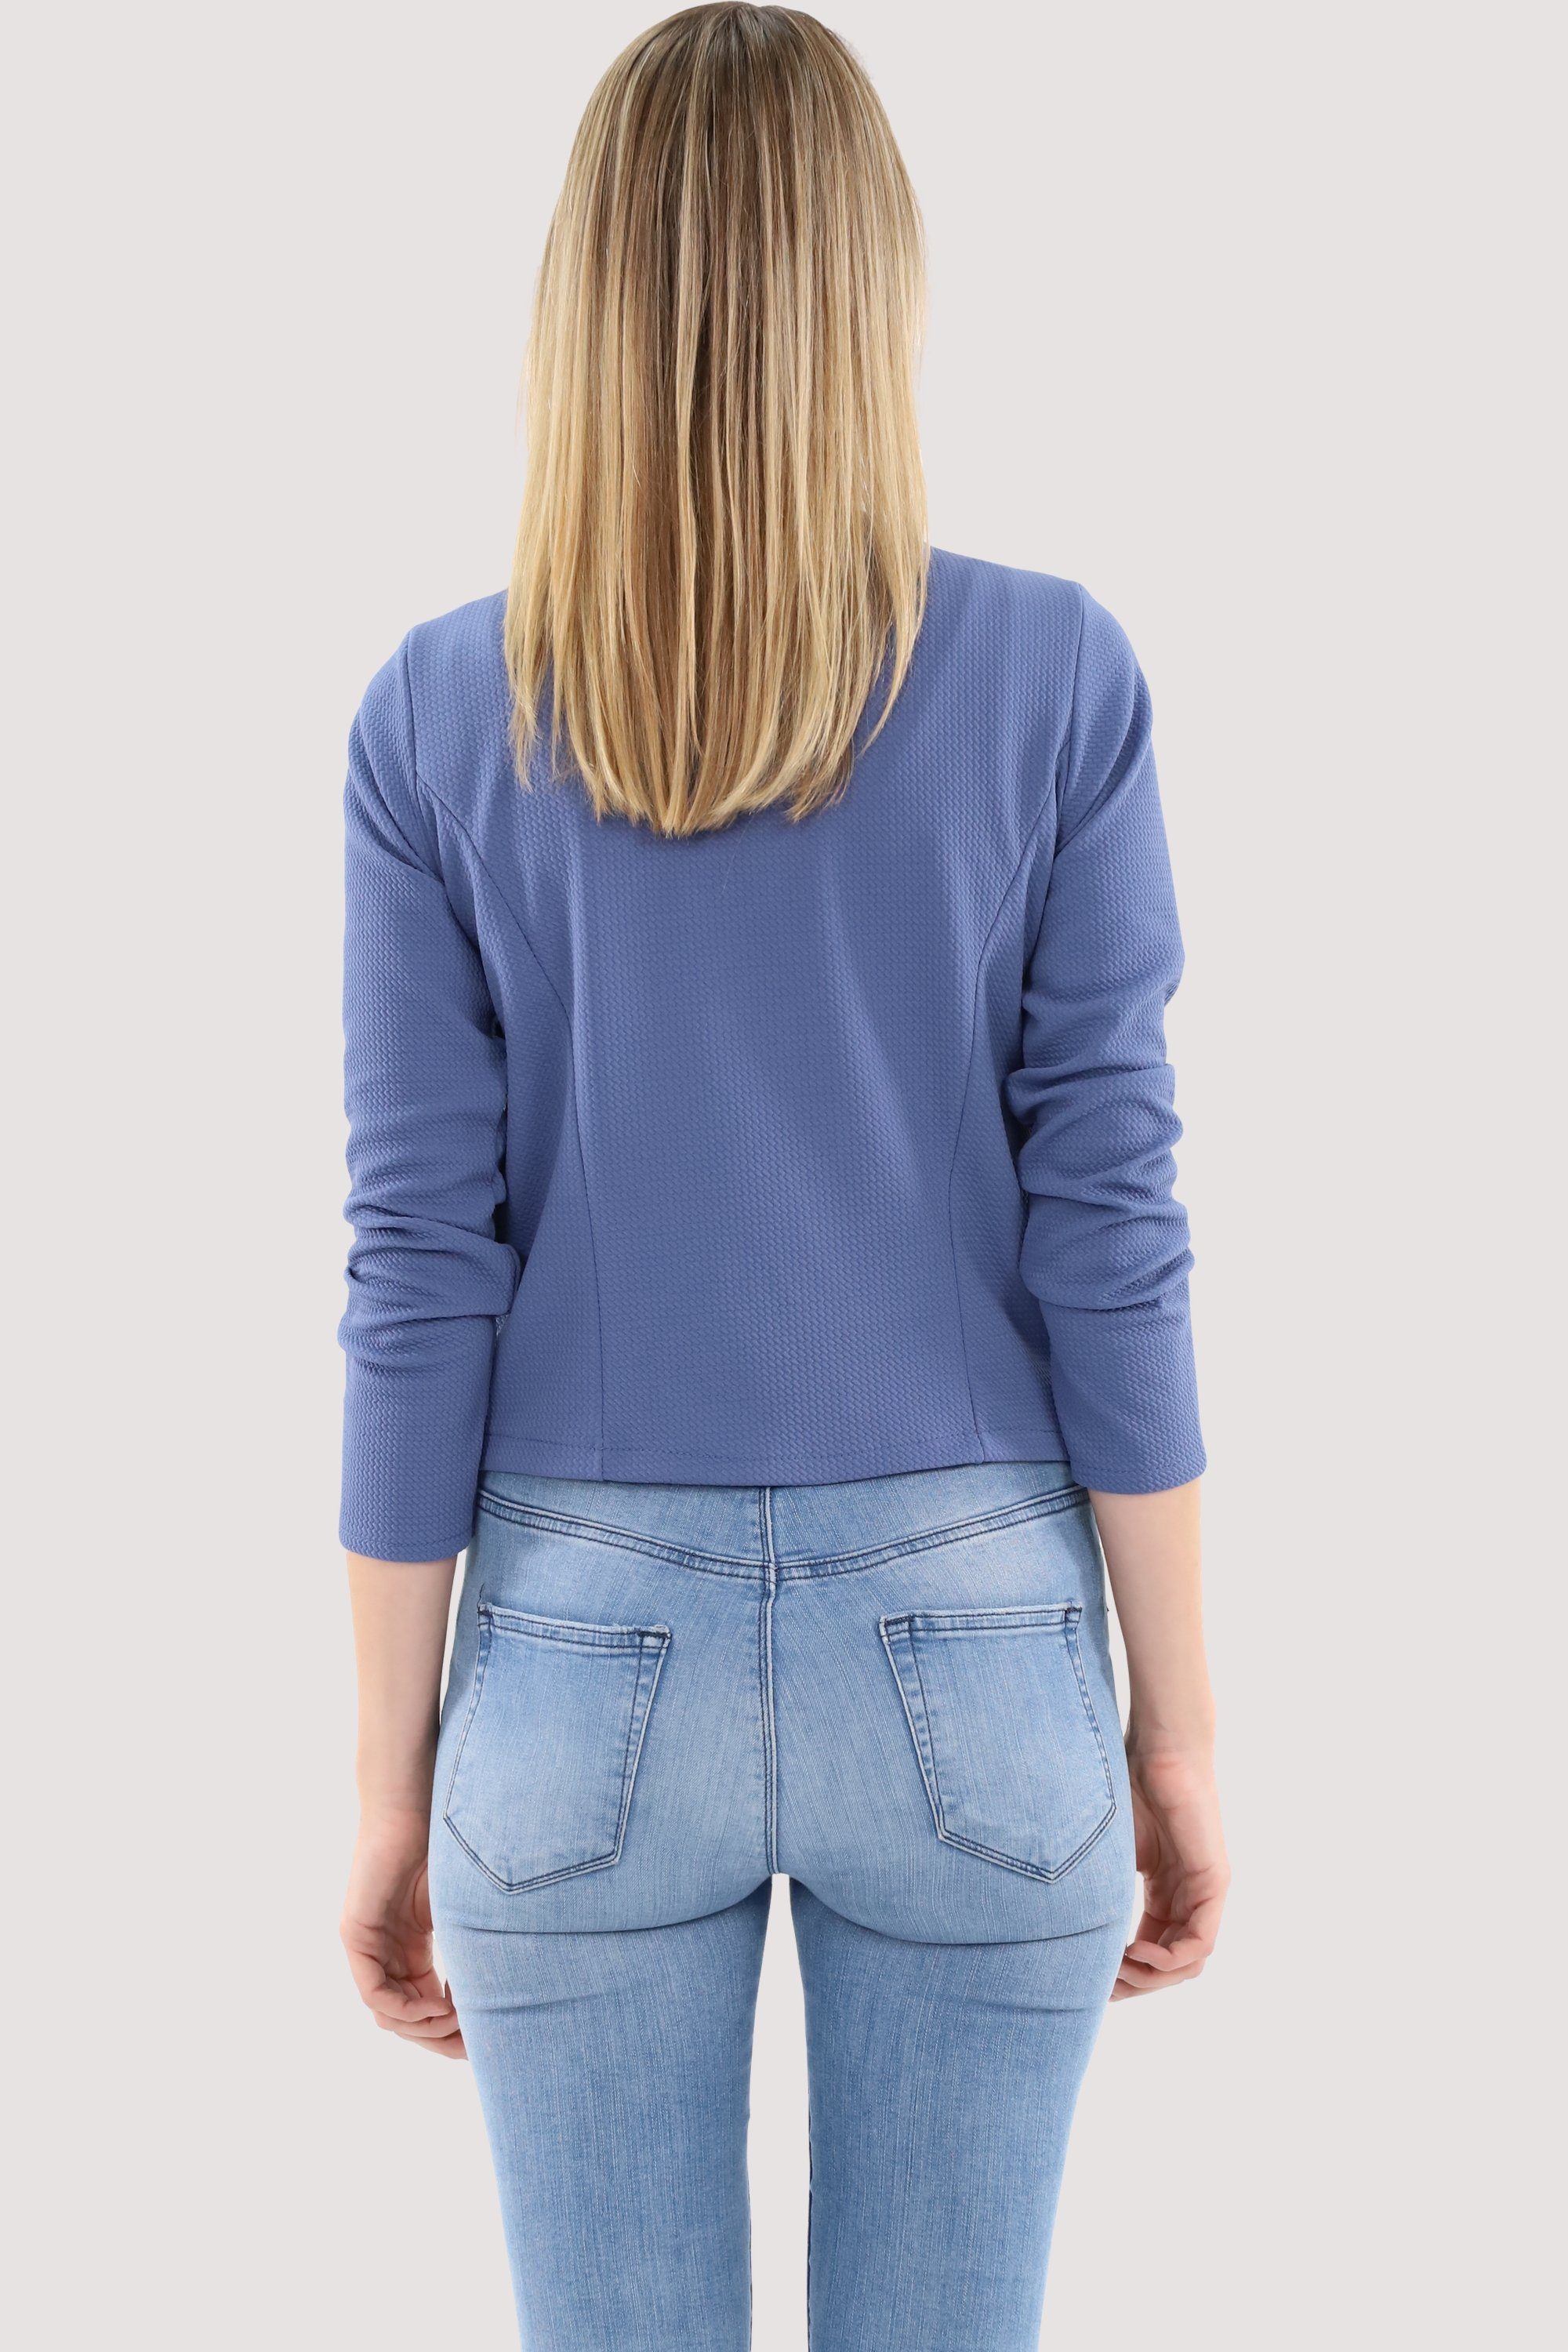 malito more than fashion jeansblau im Jackenblazer 6040 Sweatblazer Basic-Look